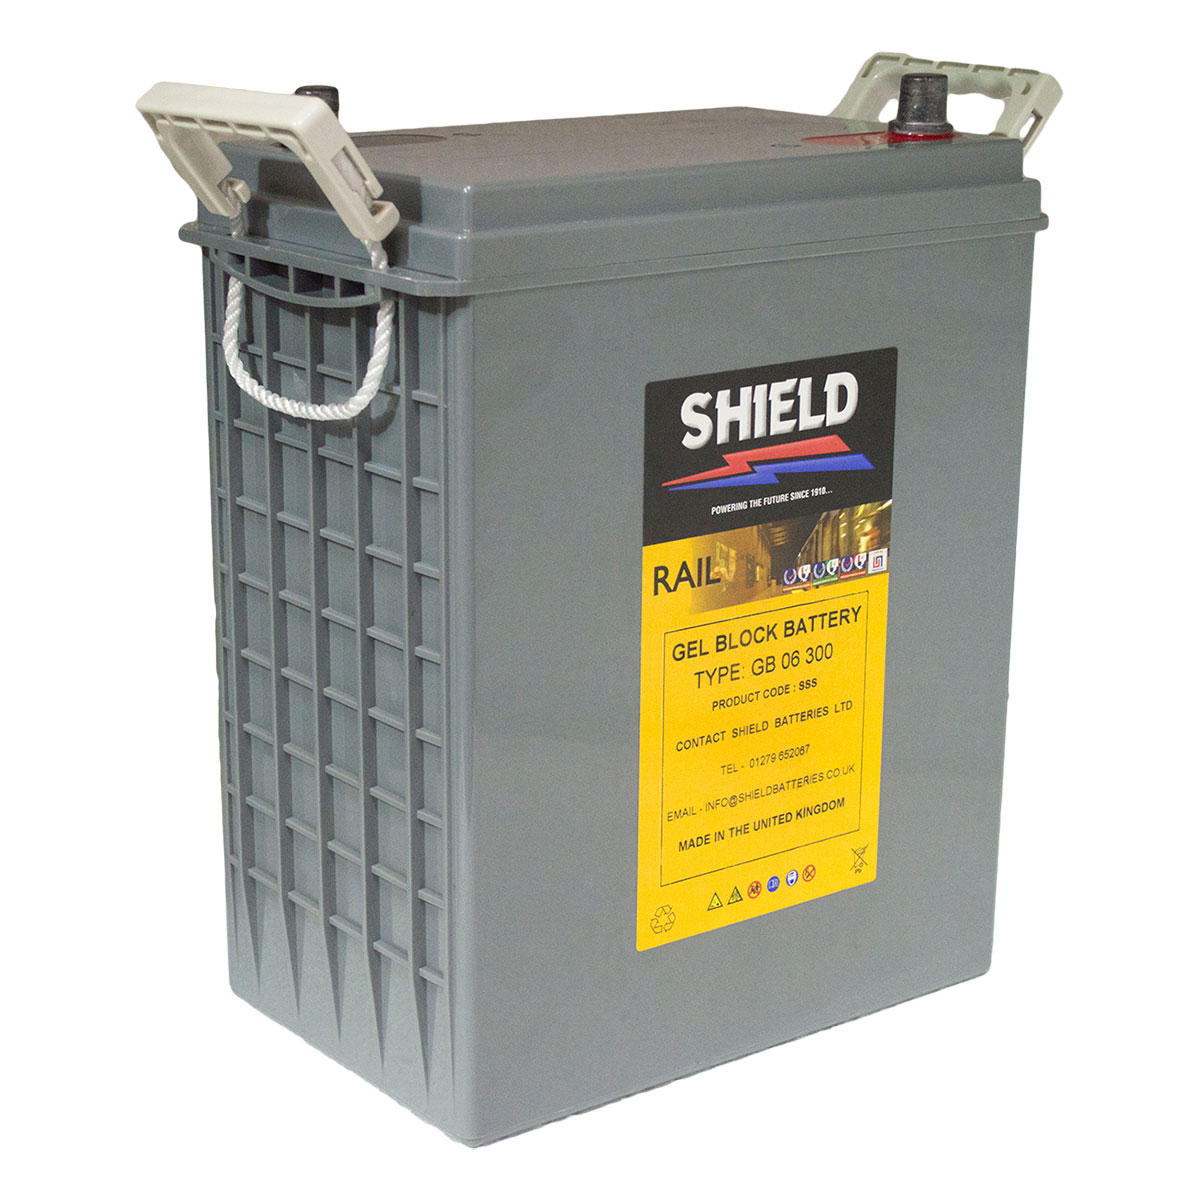 /images/common/Shield-Rail-Battery.jpg